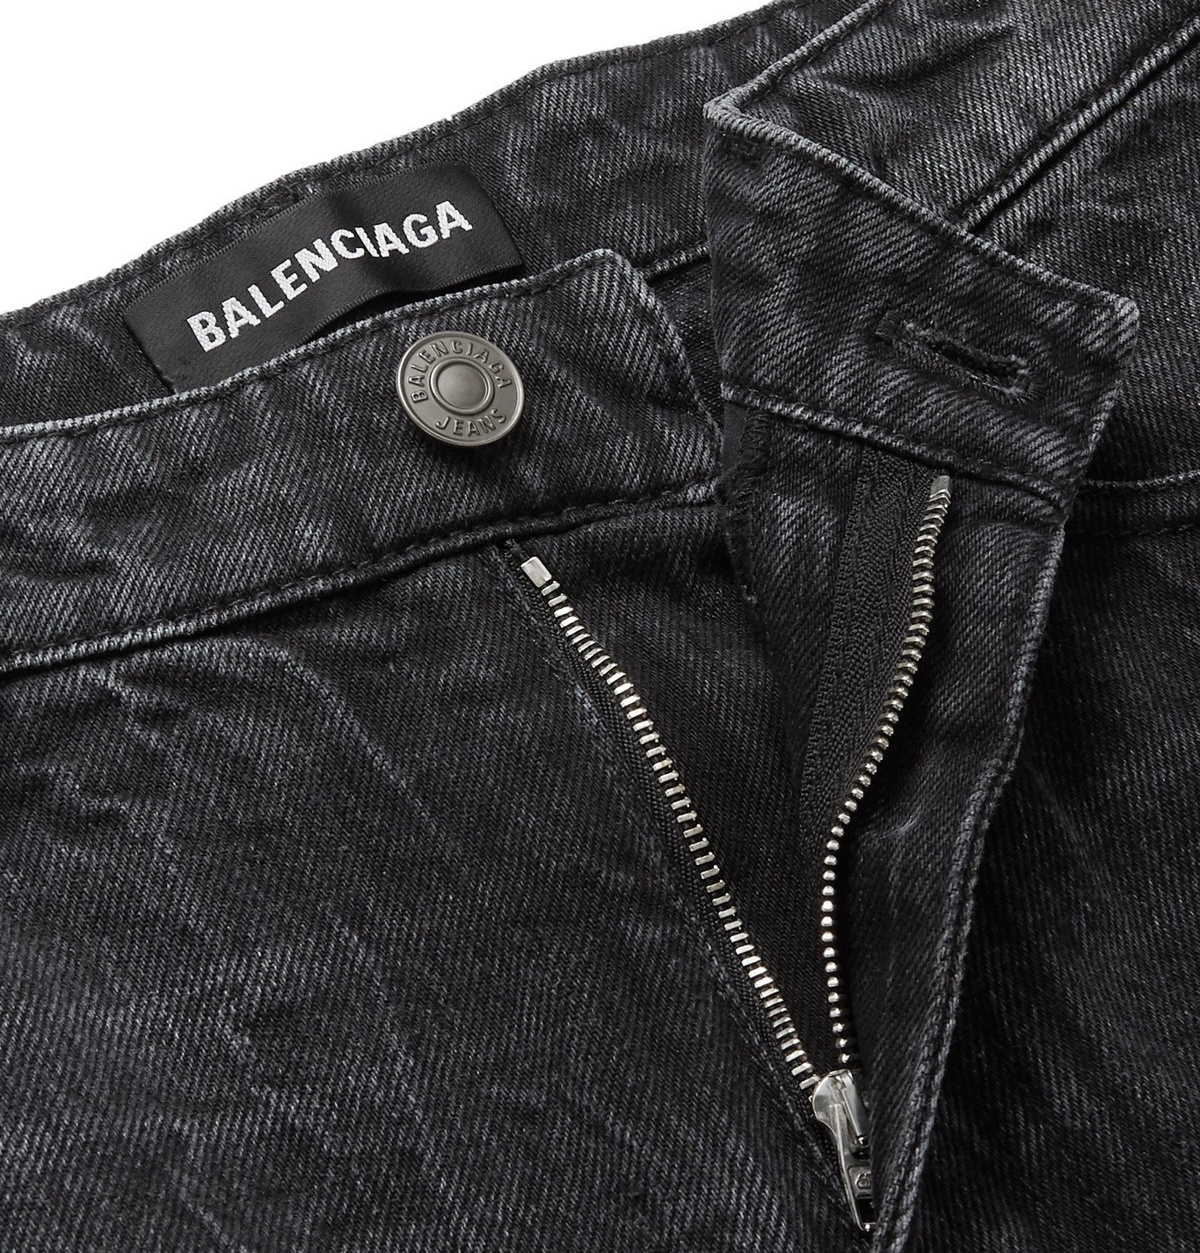 Balenciaga - Acid-Wash Denim Jeans - Black